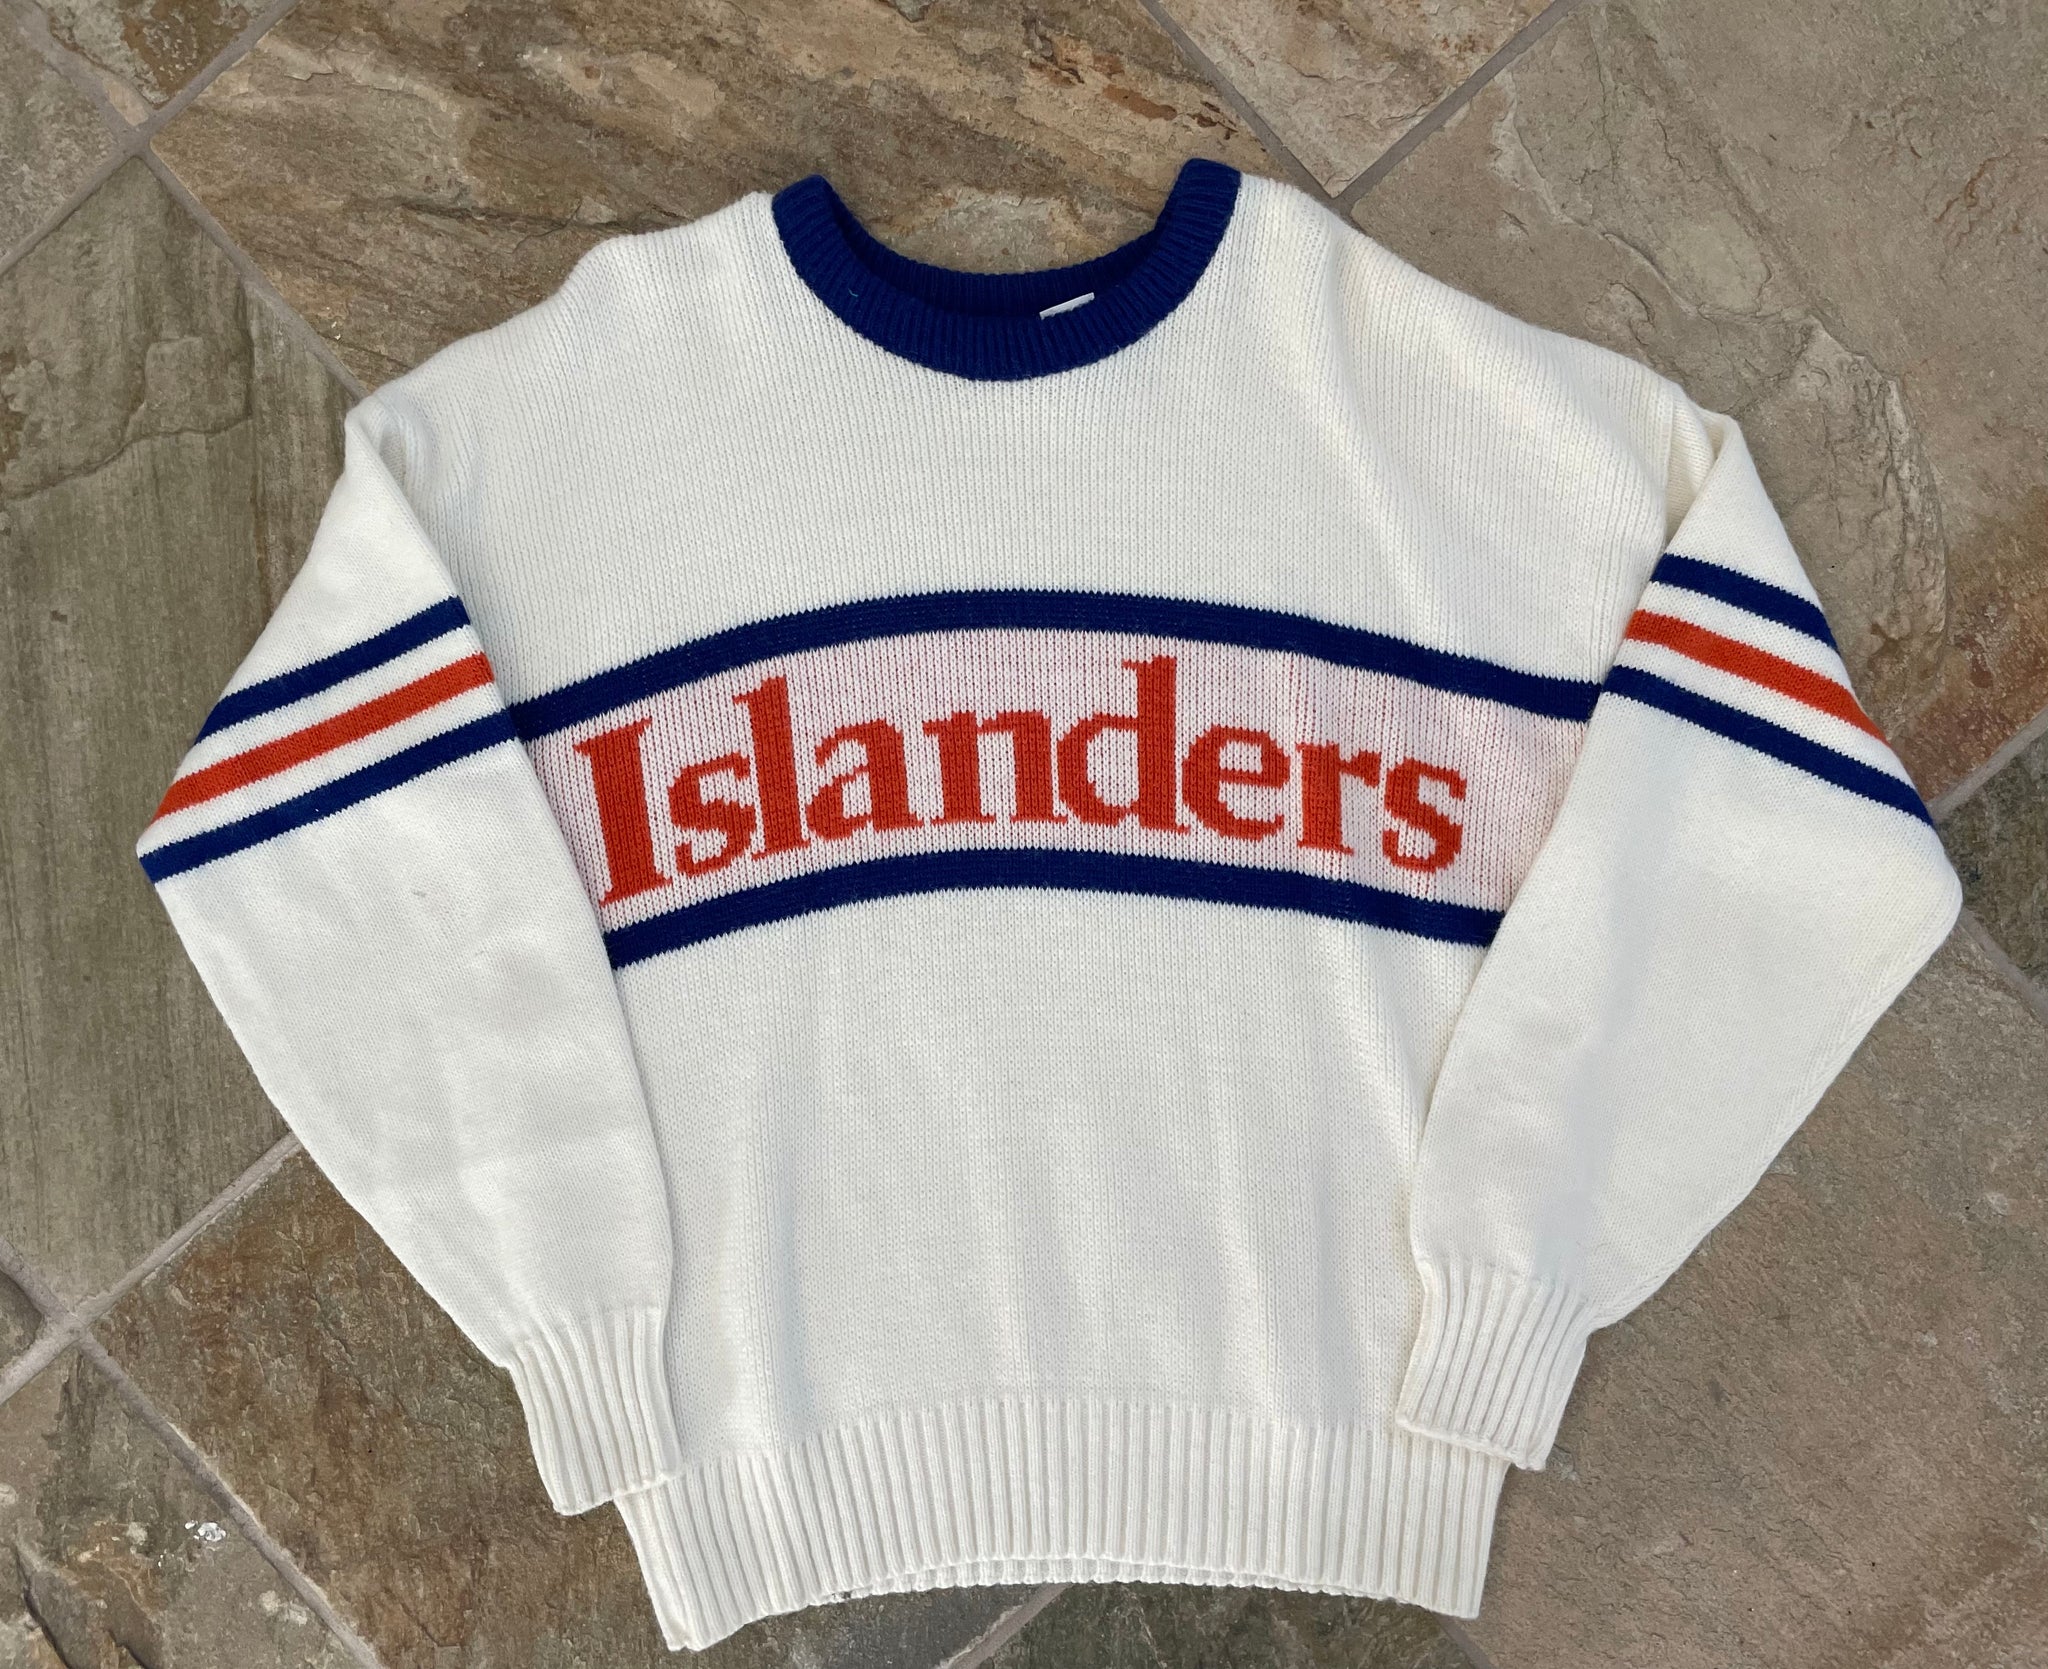 New York Islanders Crewneck Sweatshirts for Sale